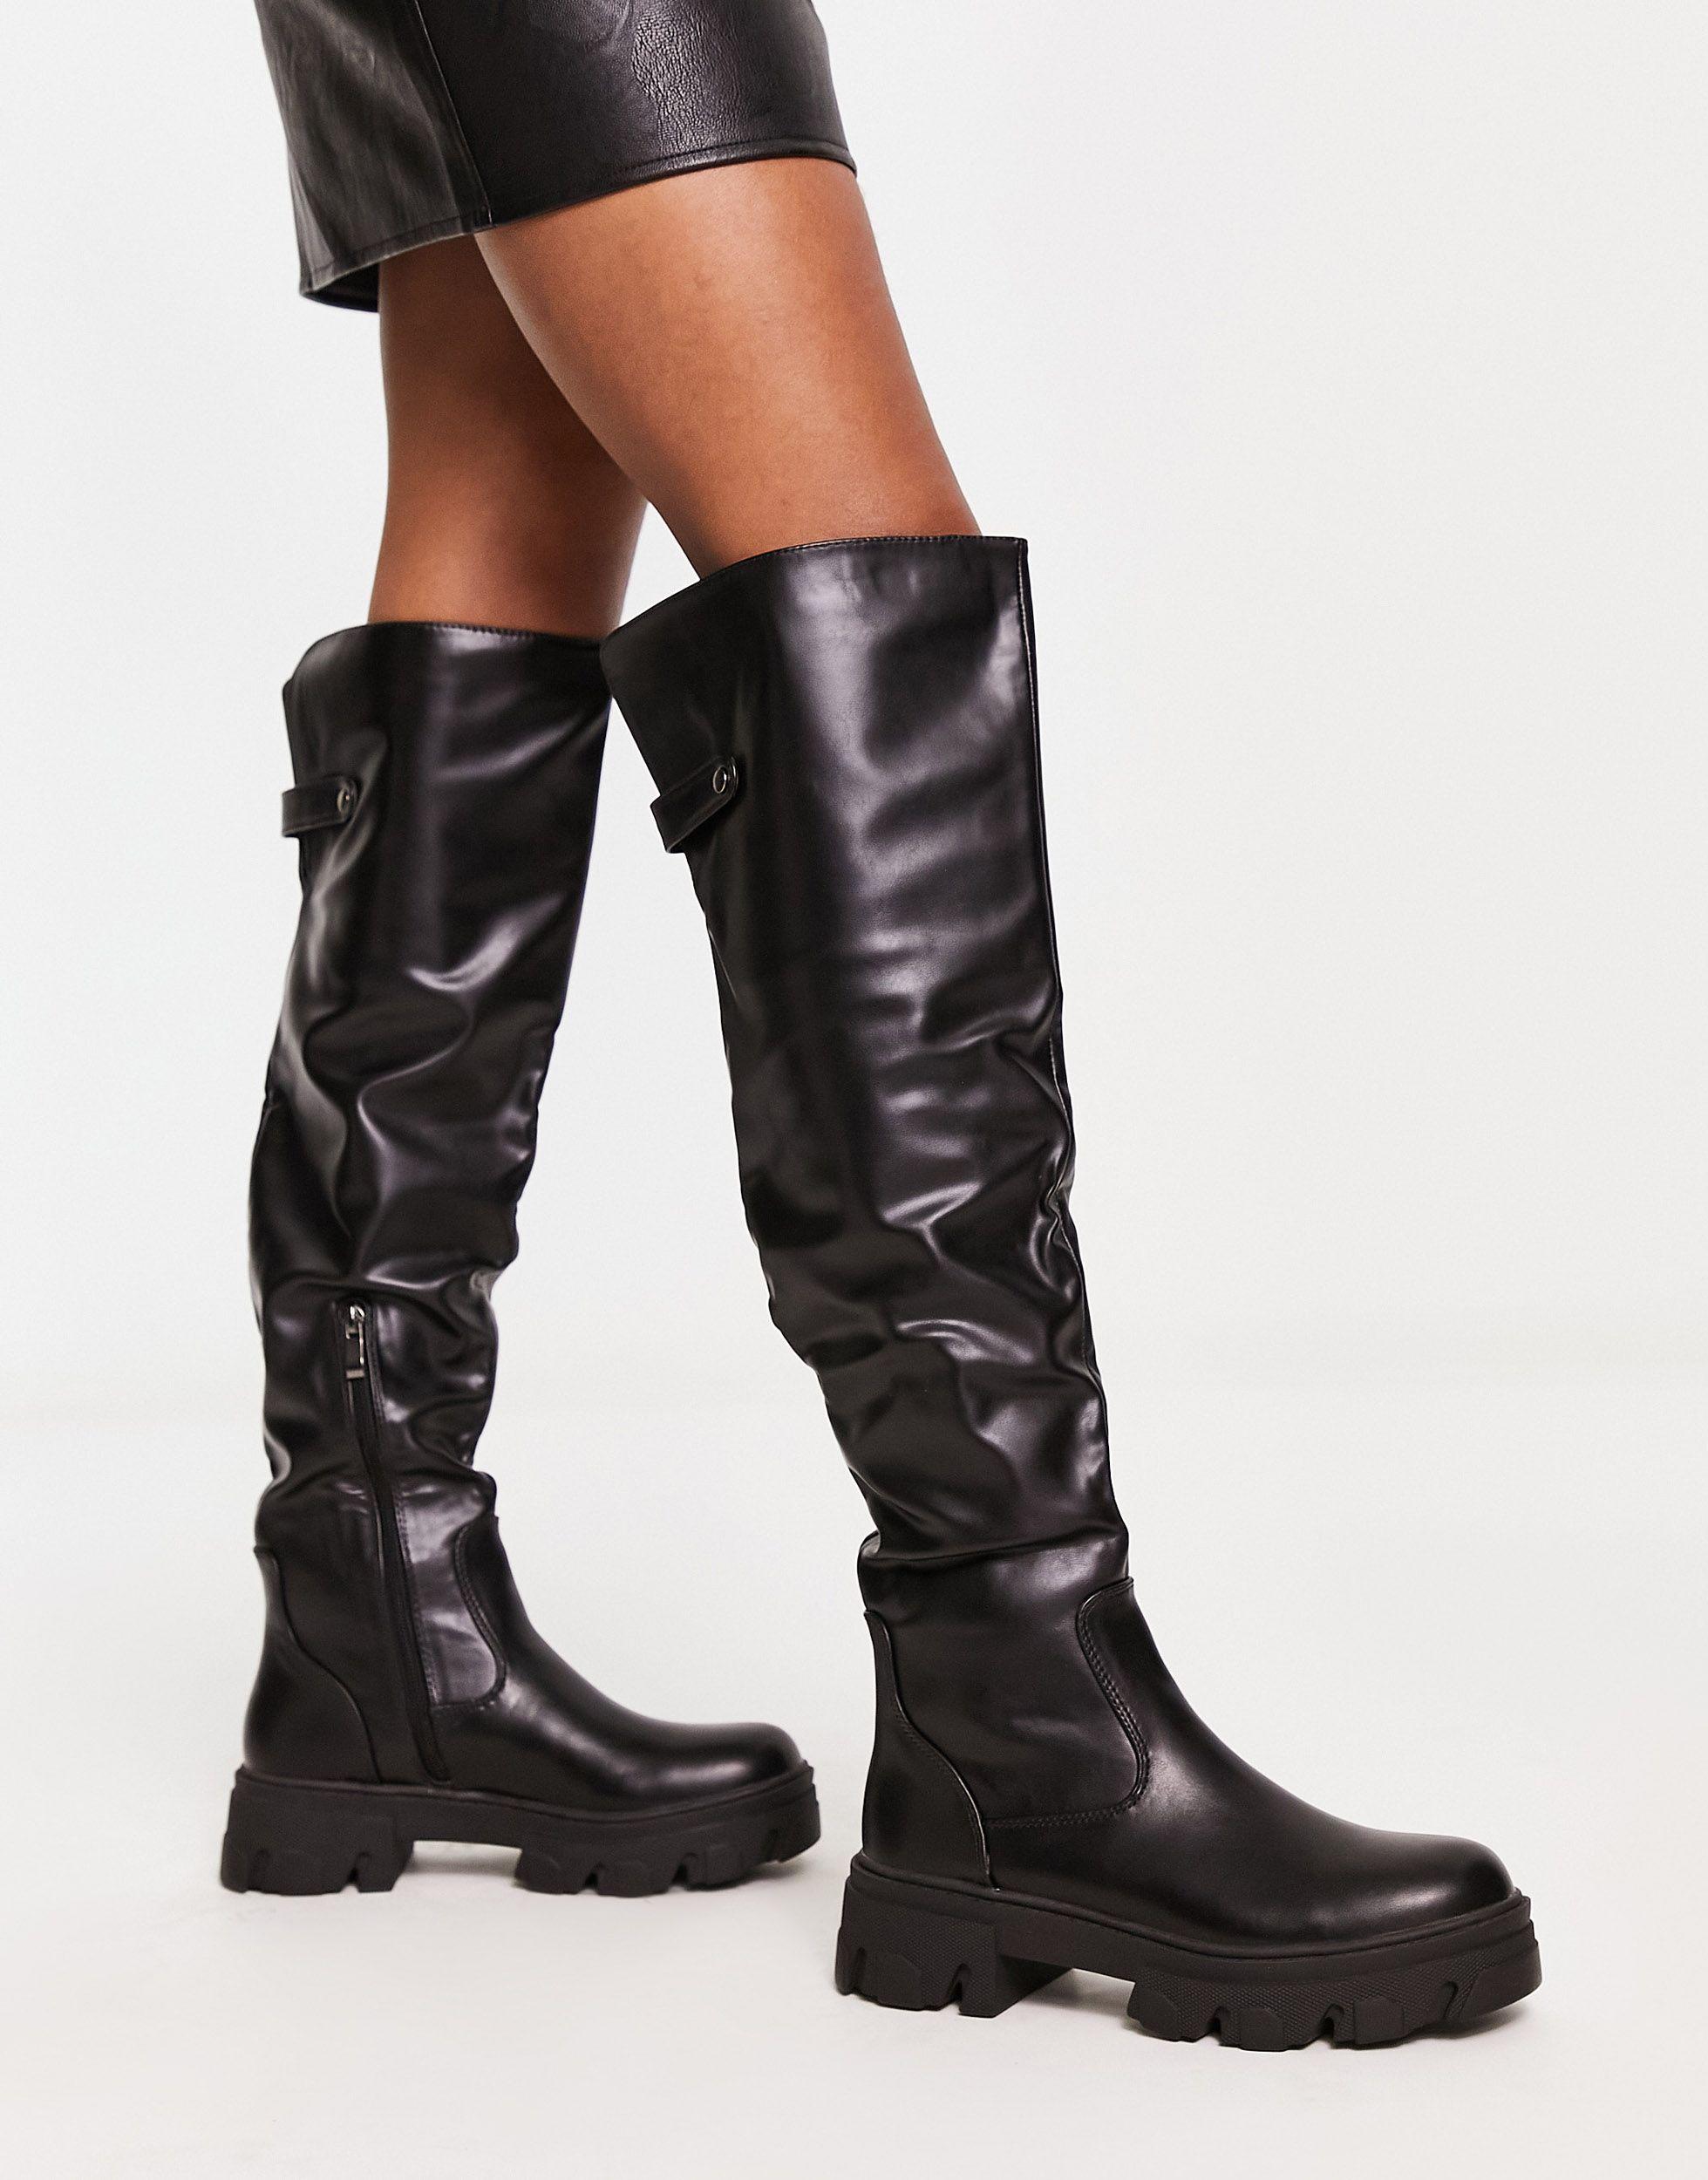 Urban Revivo Chunky Knee High Boot in Black | Lyst